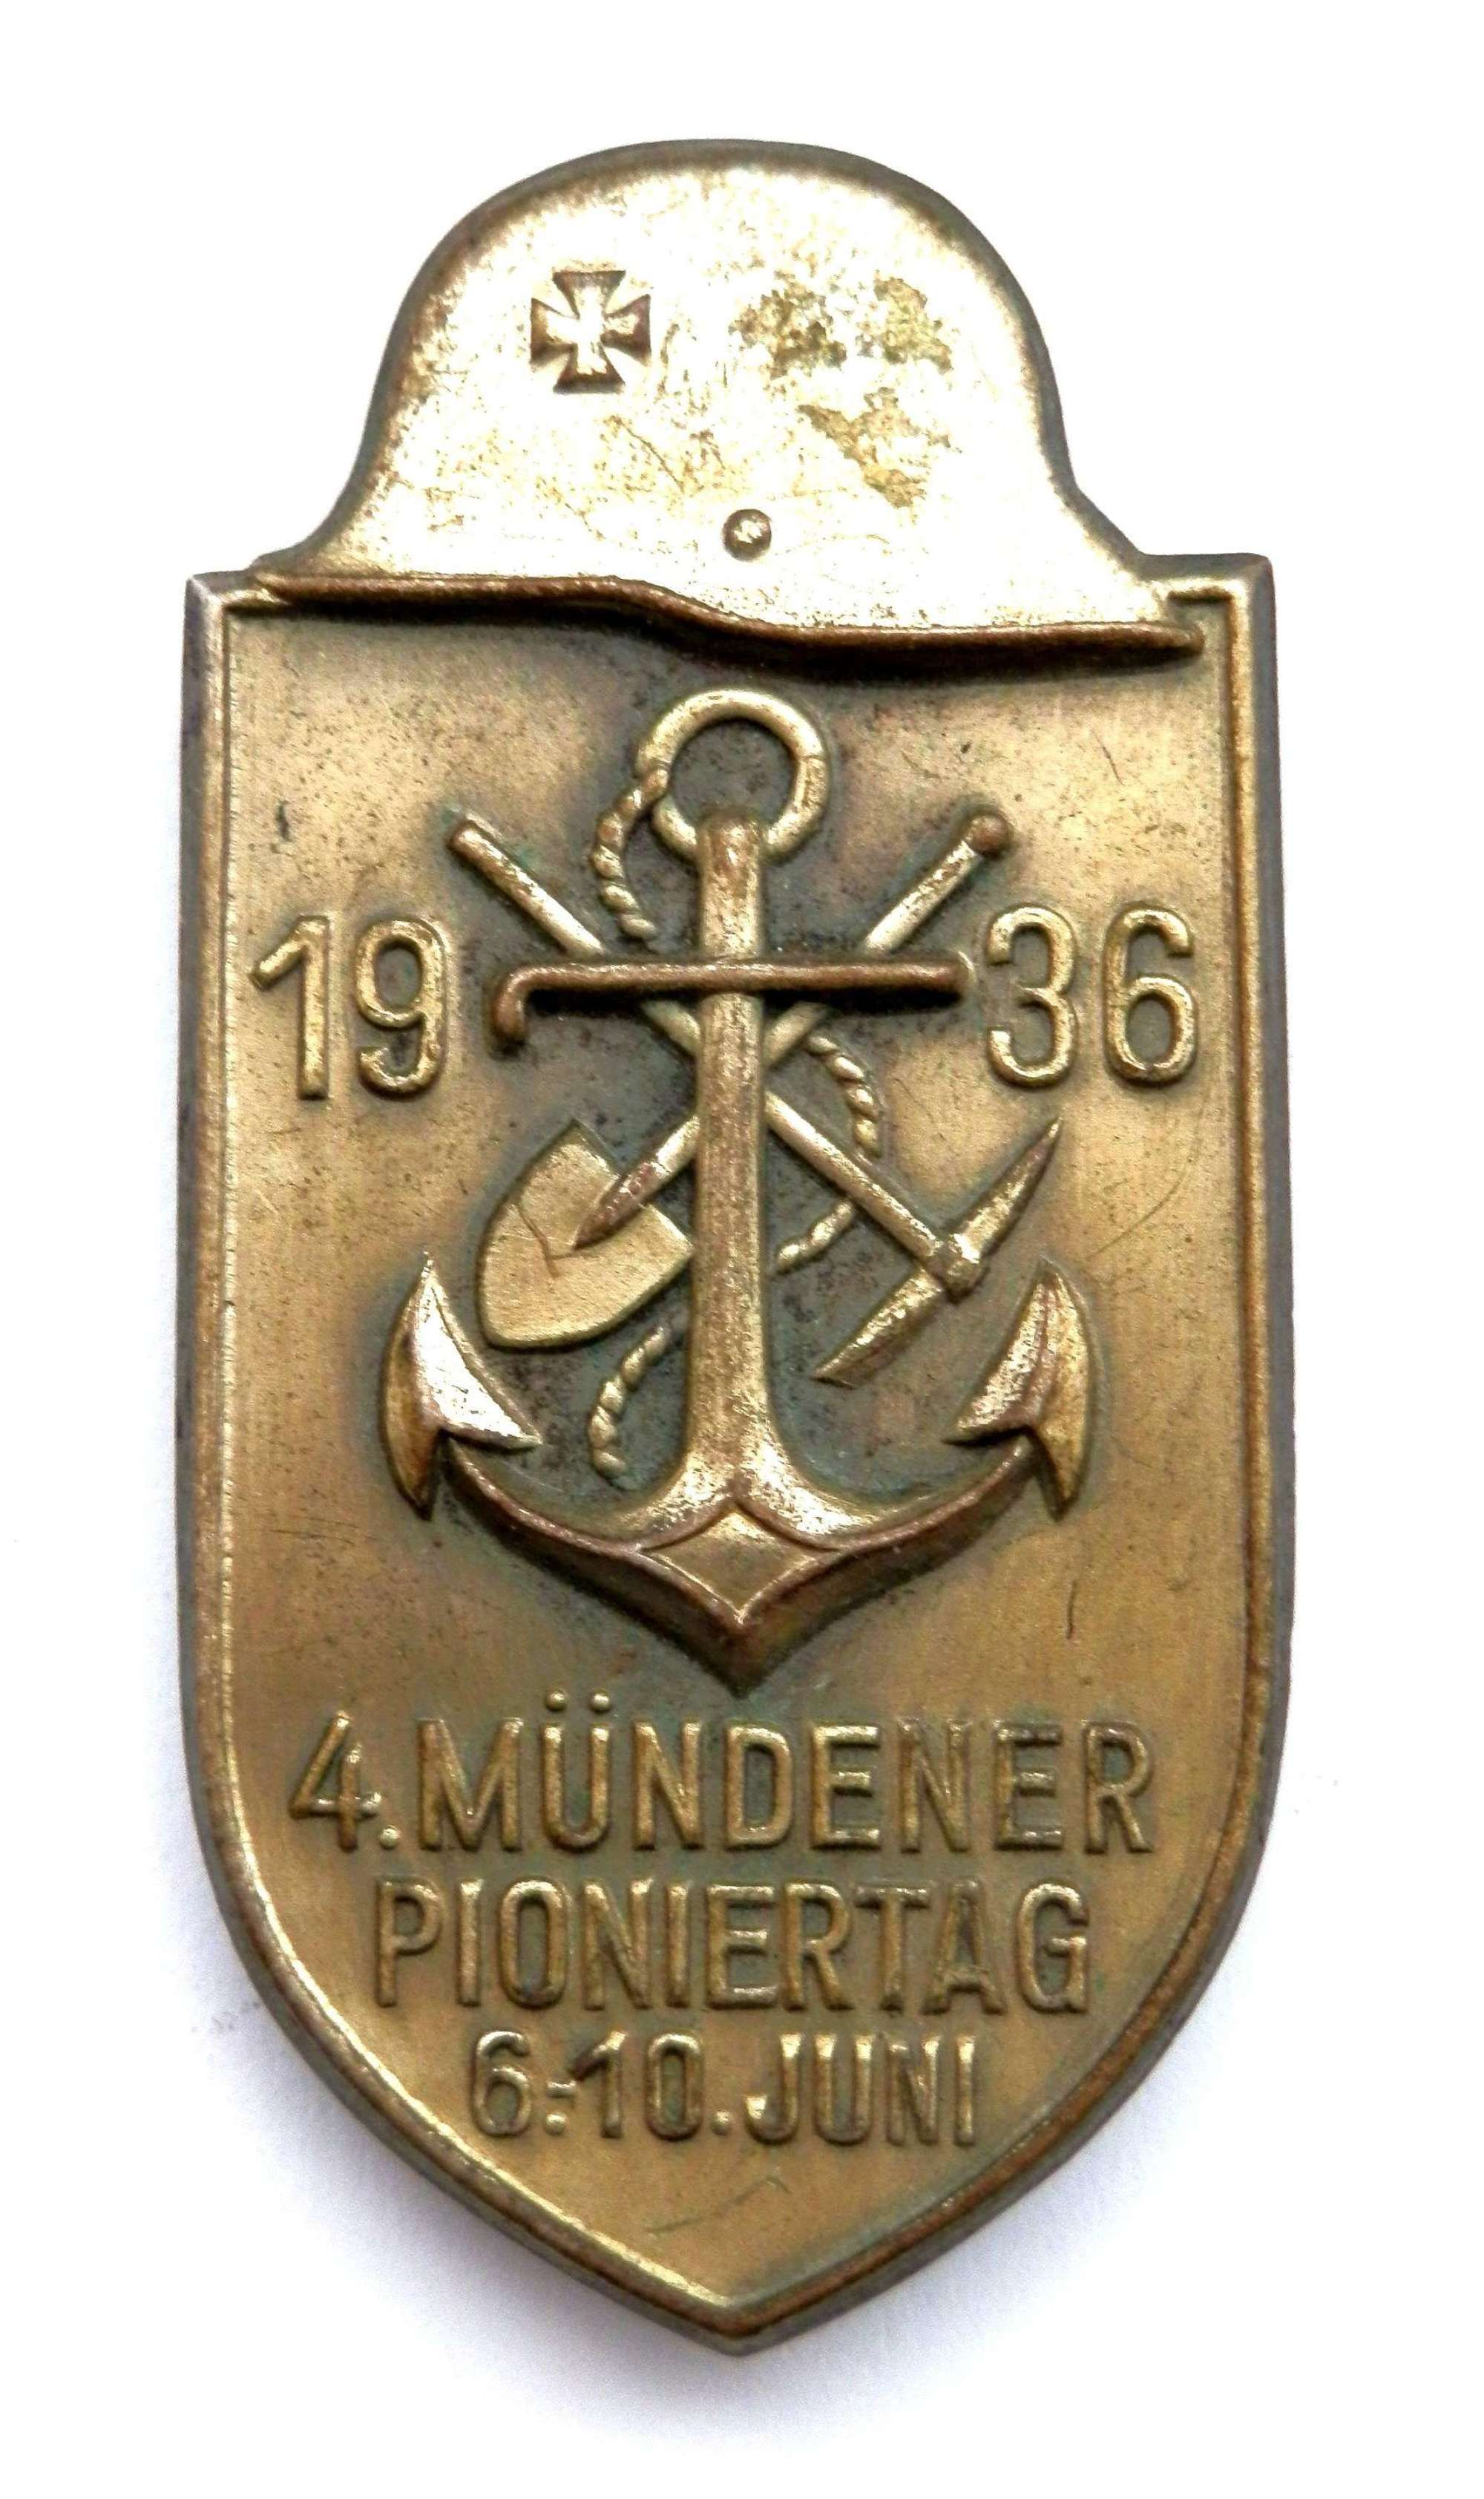 '4. Mündener Pioniertag - 6.-10. Juni 1936’ Day Badge.